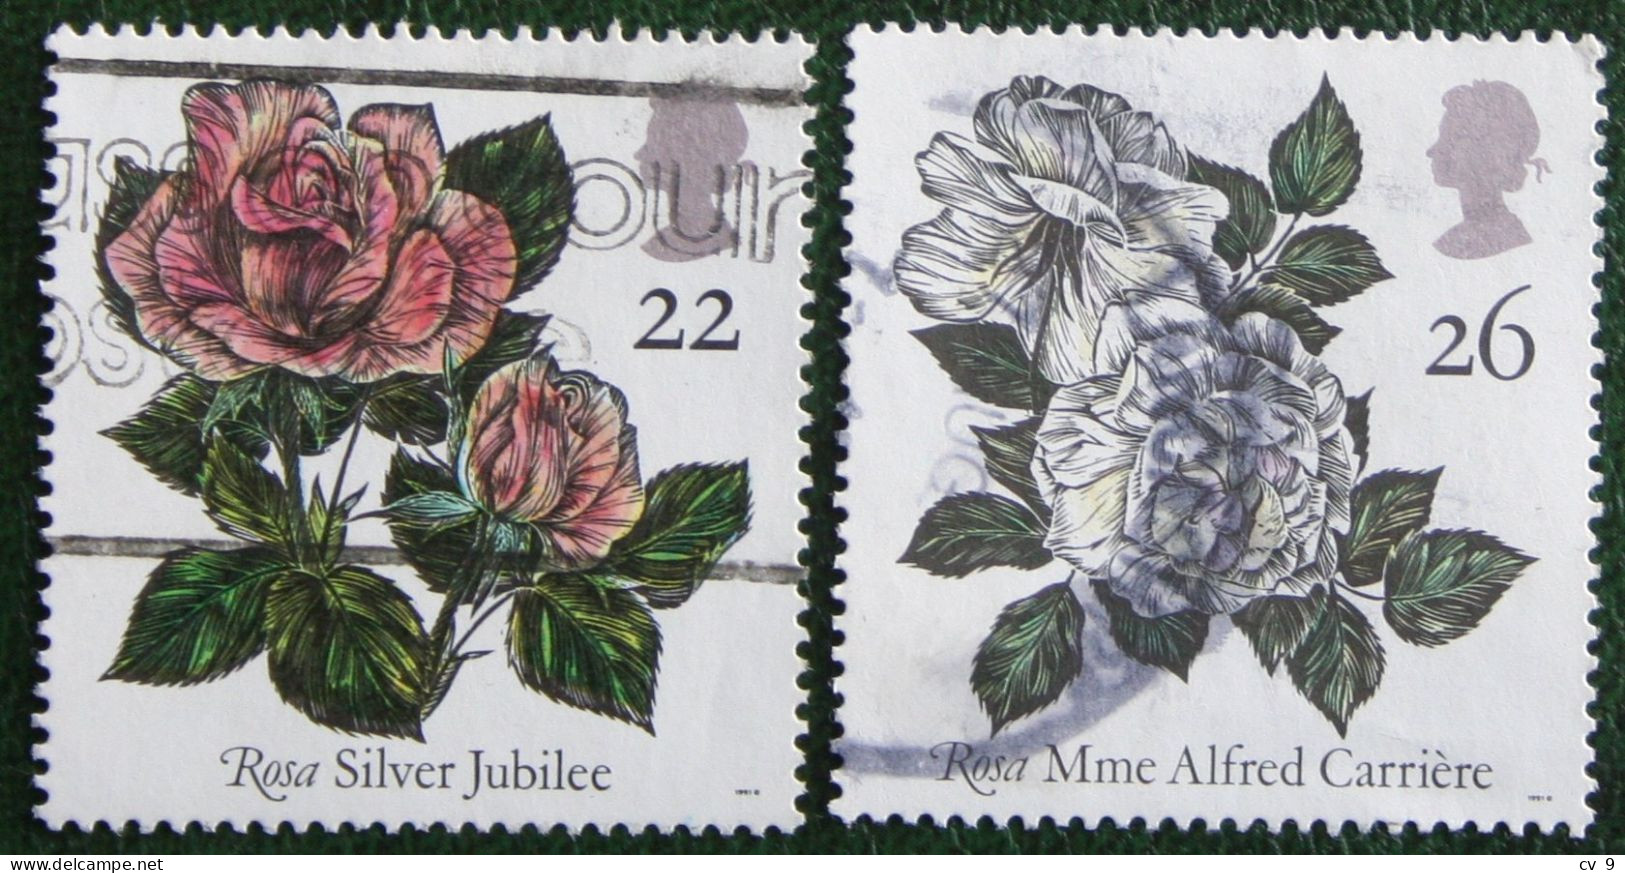 Roses Rose Flower Fleur (Mi 1345-1346) 1991 Used Gebruikt Oblitere ENGLAND GRANDE-BRETAGNE GB GREAT BRITAIN - Usati